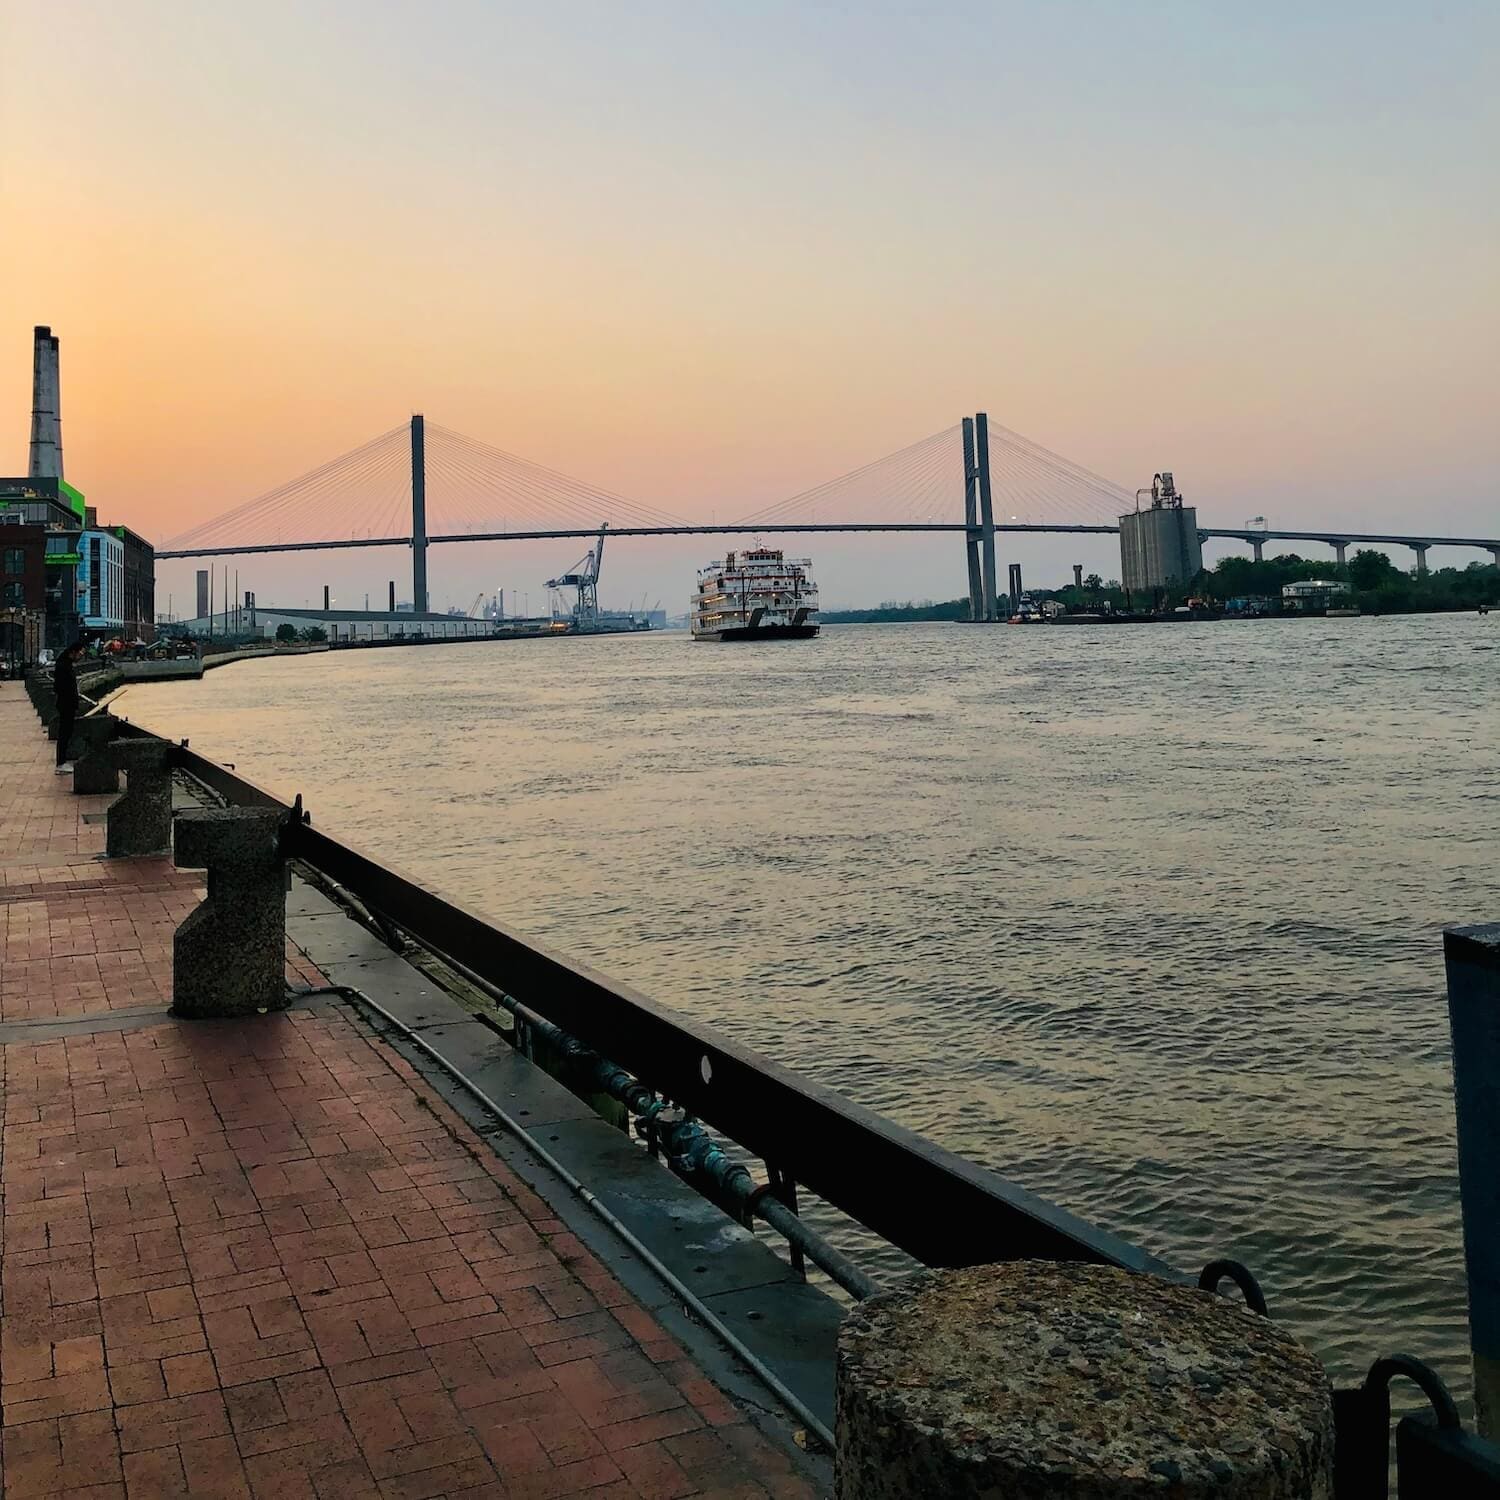 Savannah waterfront at sunset